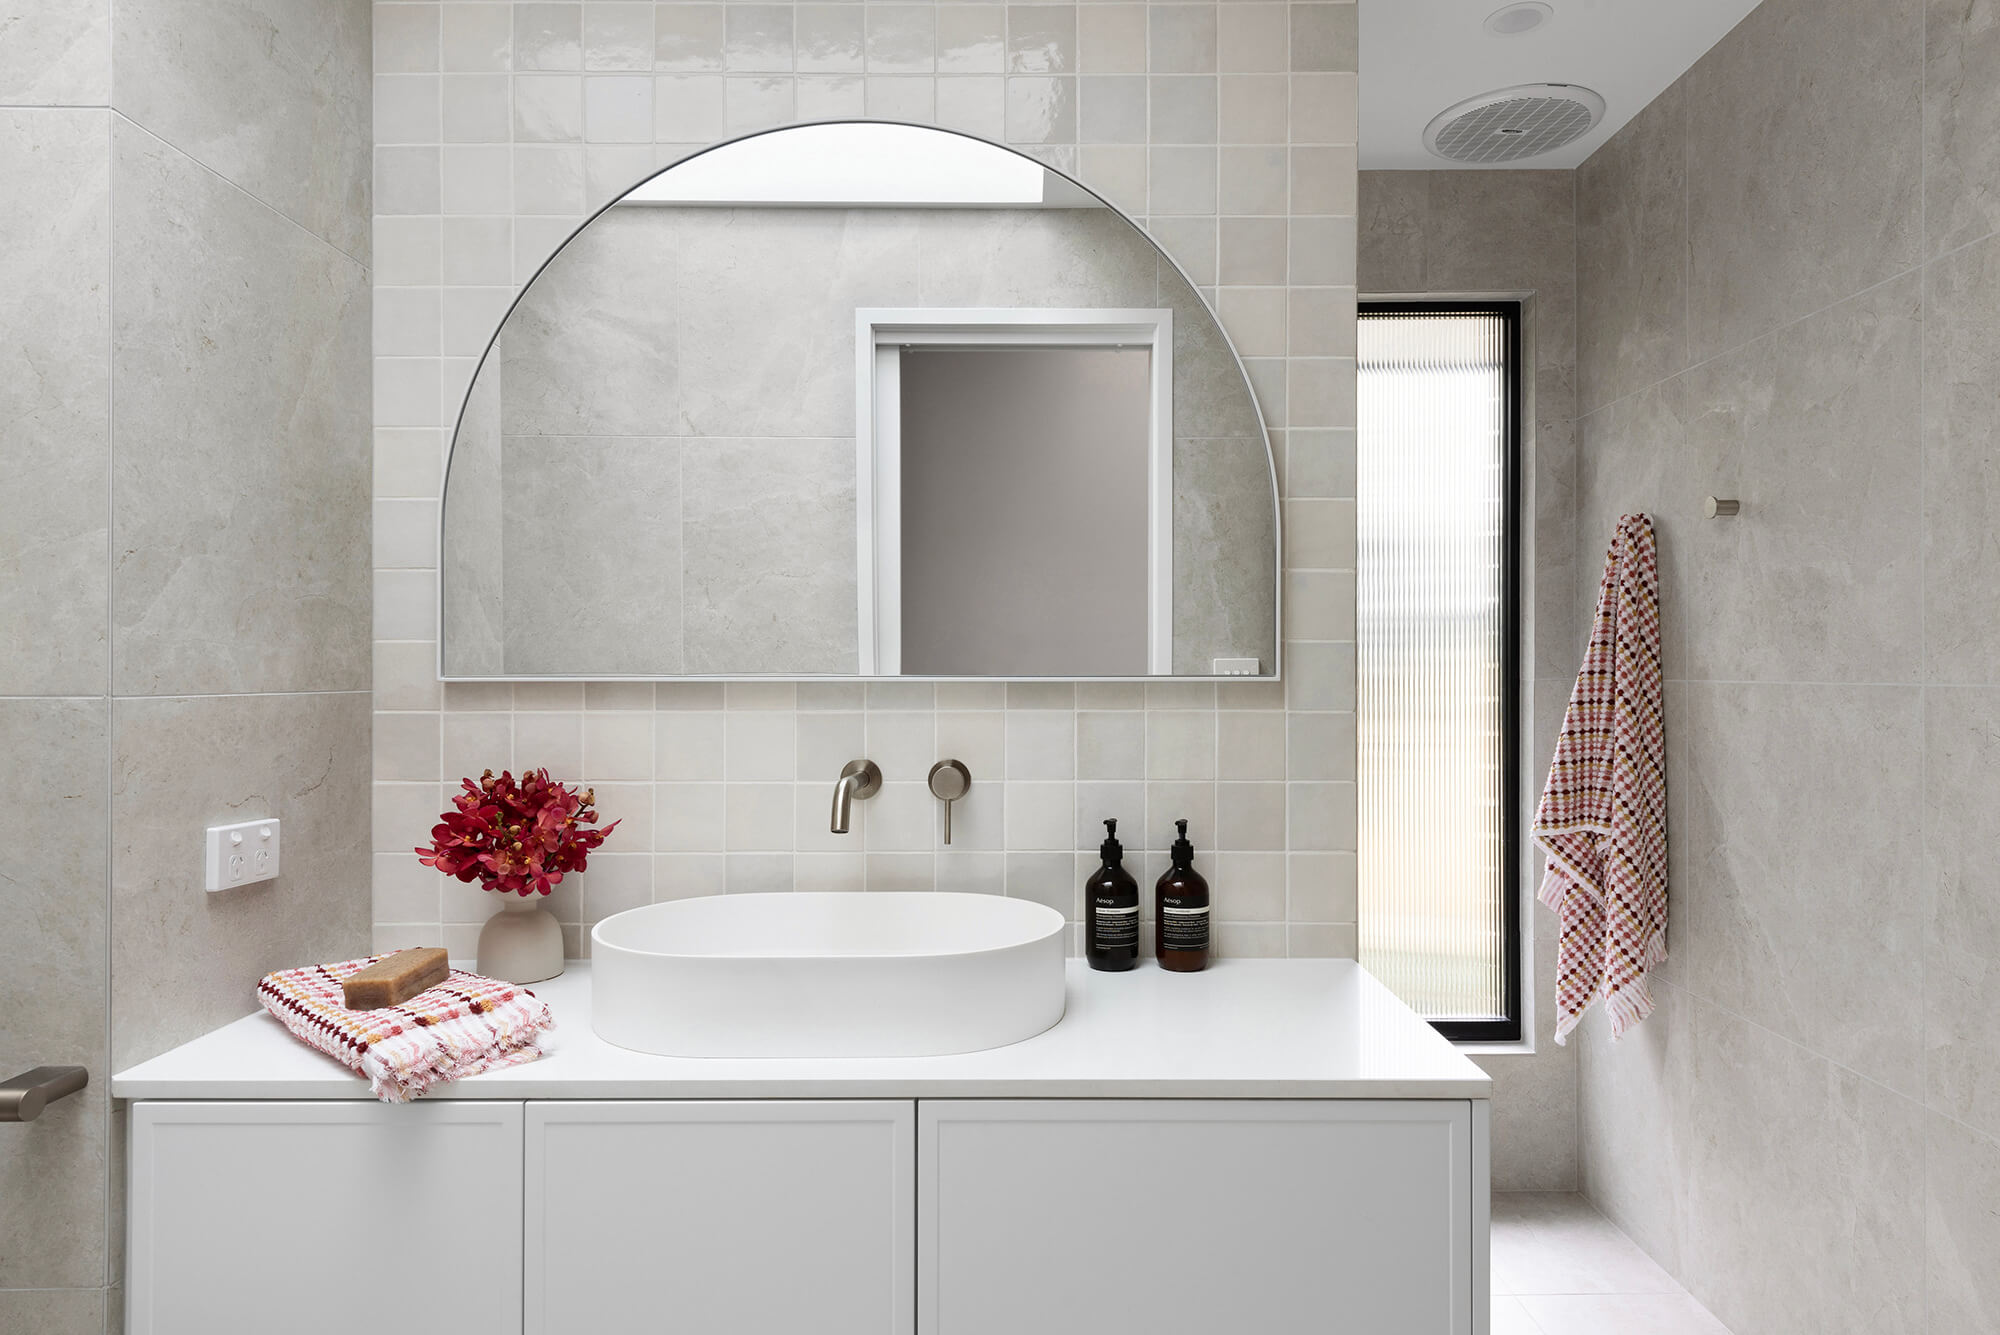 A custom designed bathroom featuring a Melange Bianco tile. Designed and built by MJ Harris Group.